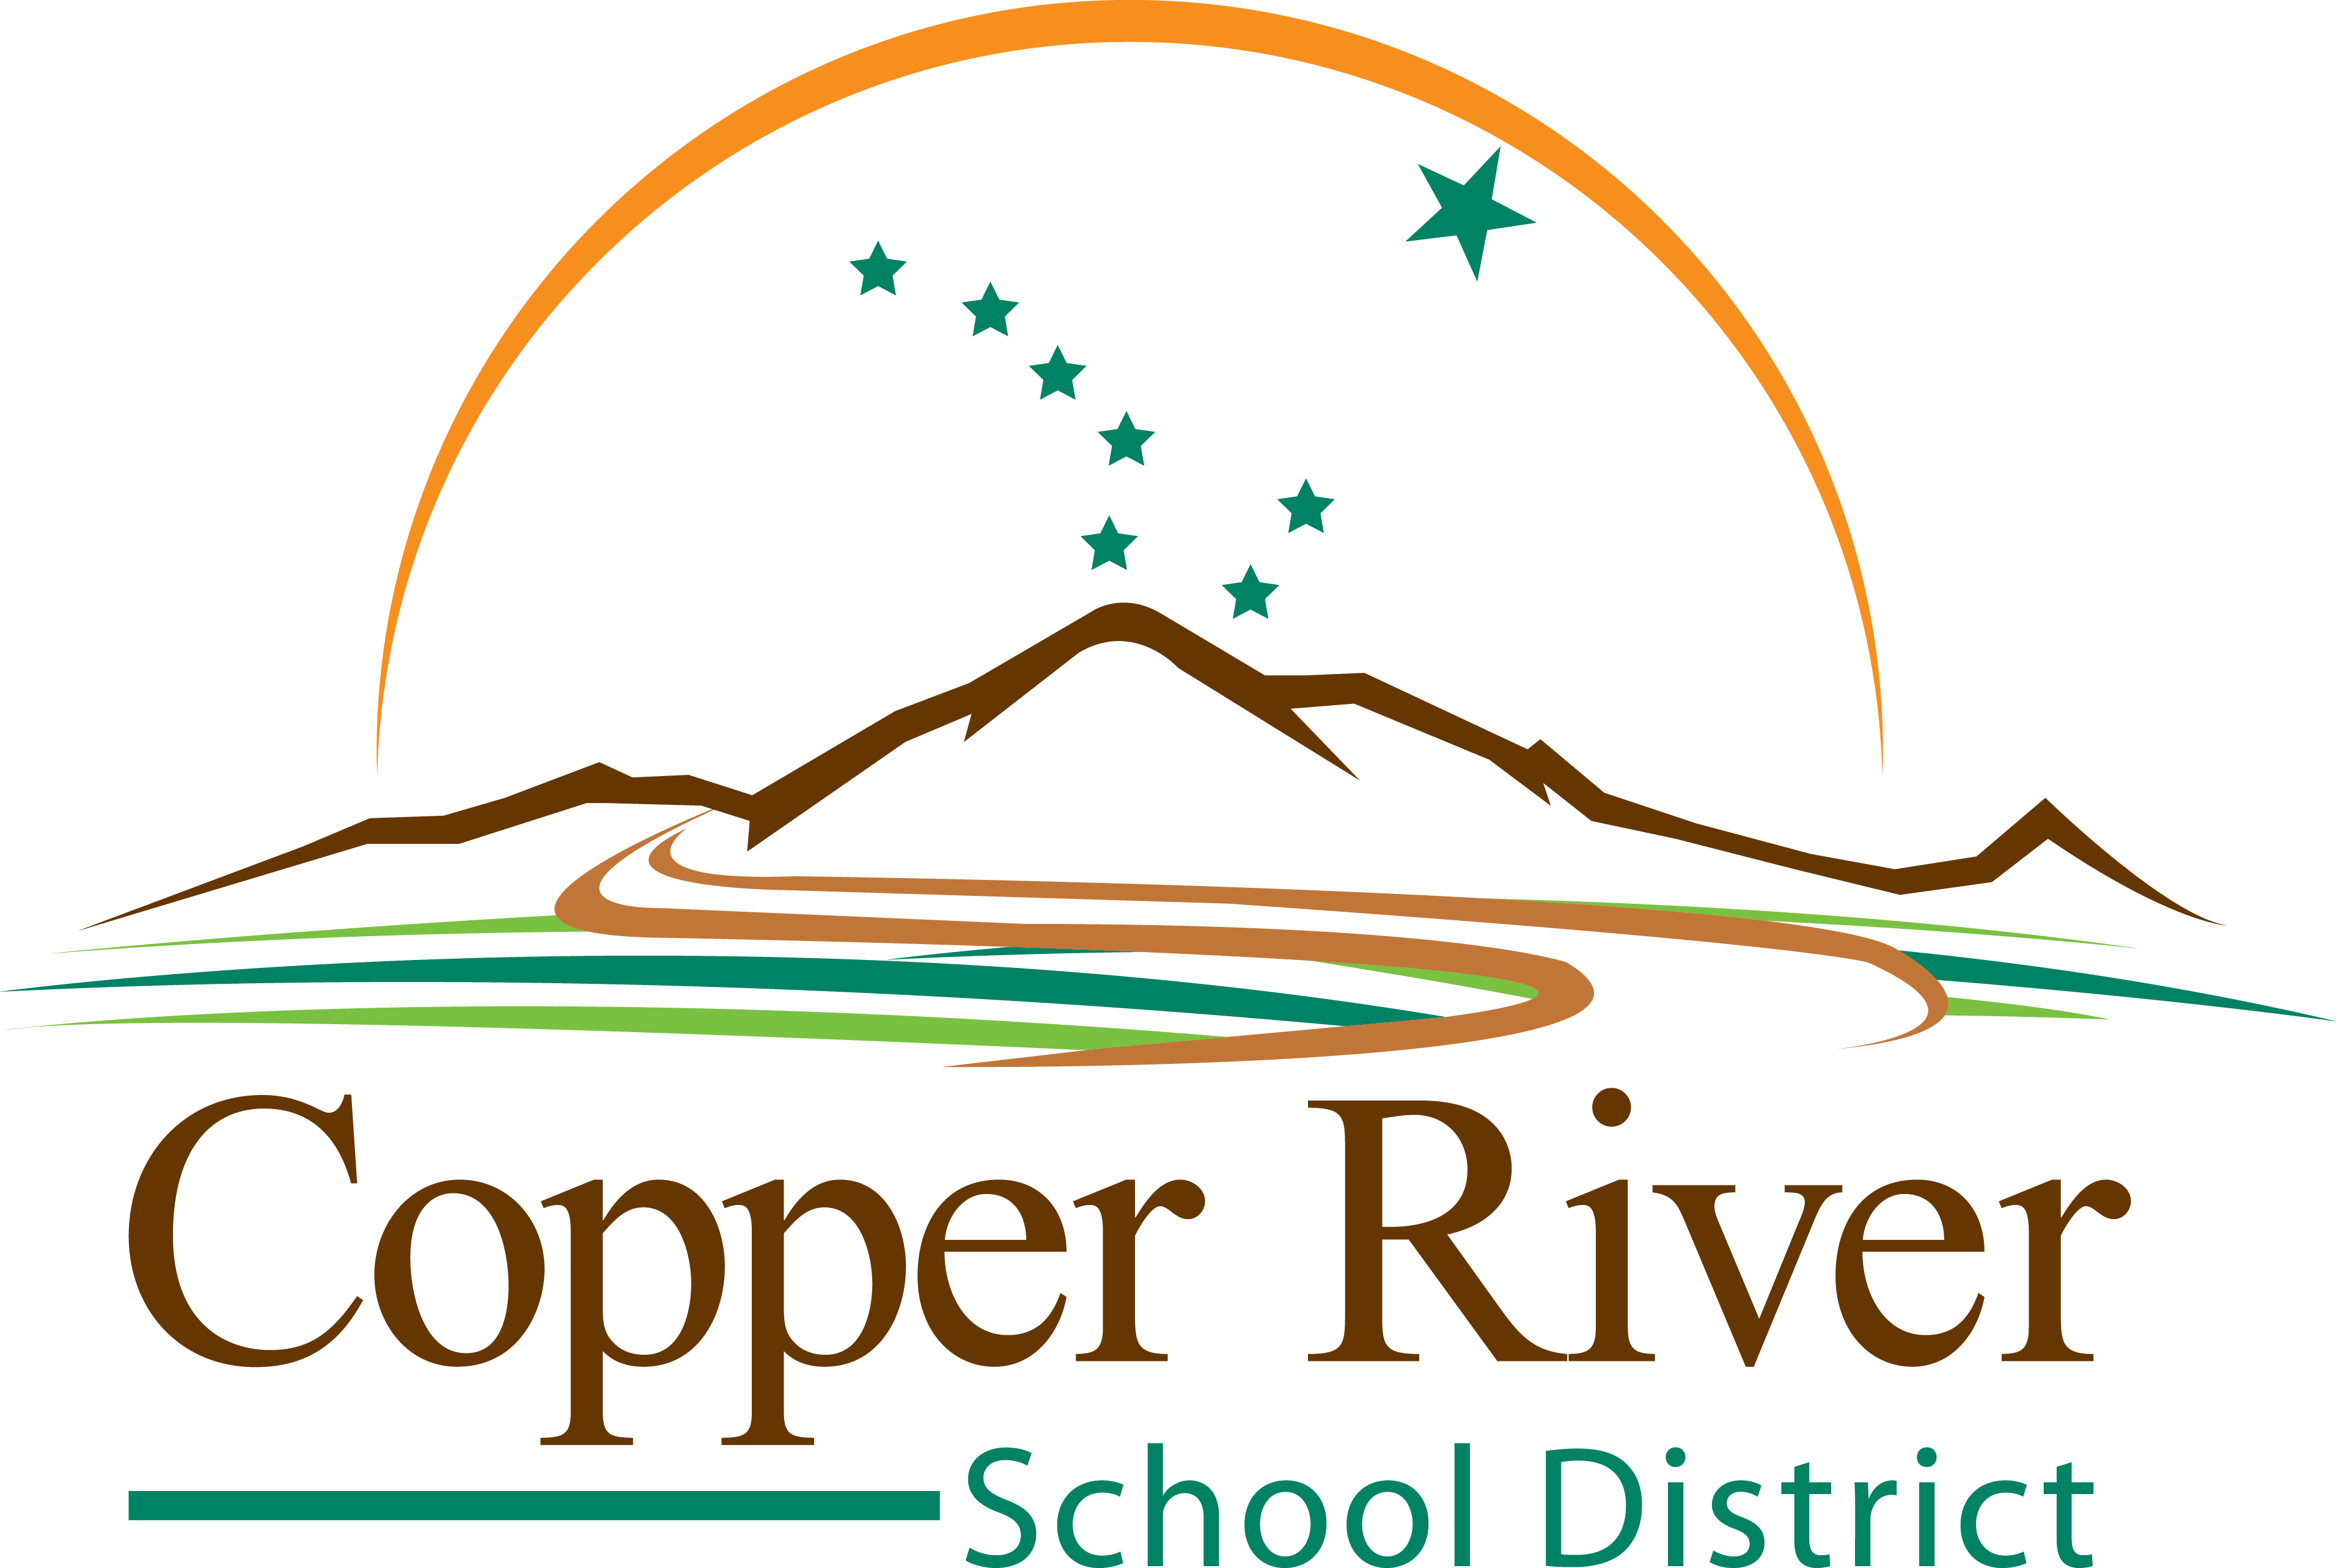 Copper River School District logo.